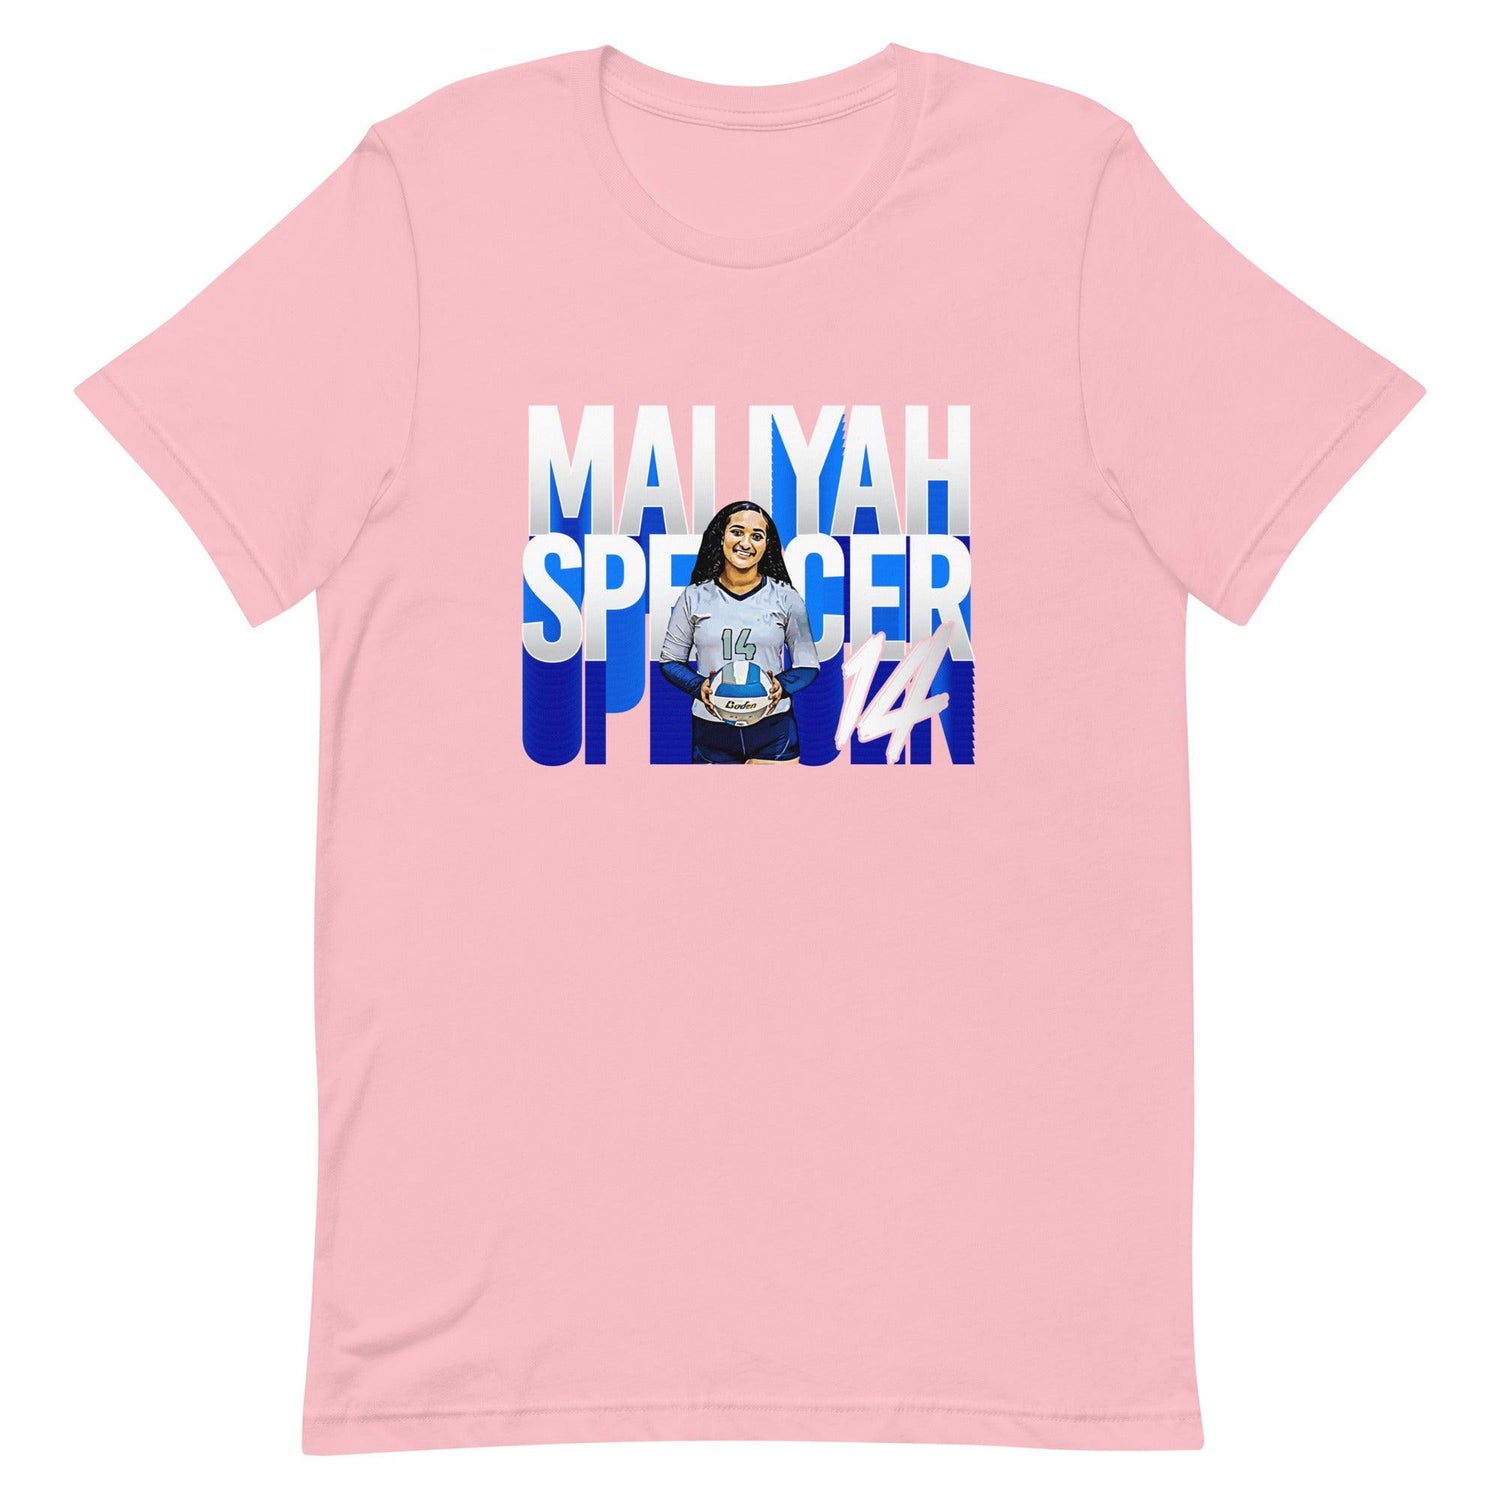 Maliyah Spencer "Gameday" t-shirt - Fan Arch